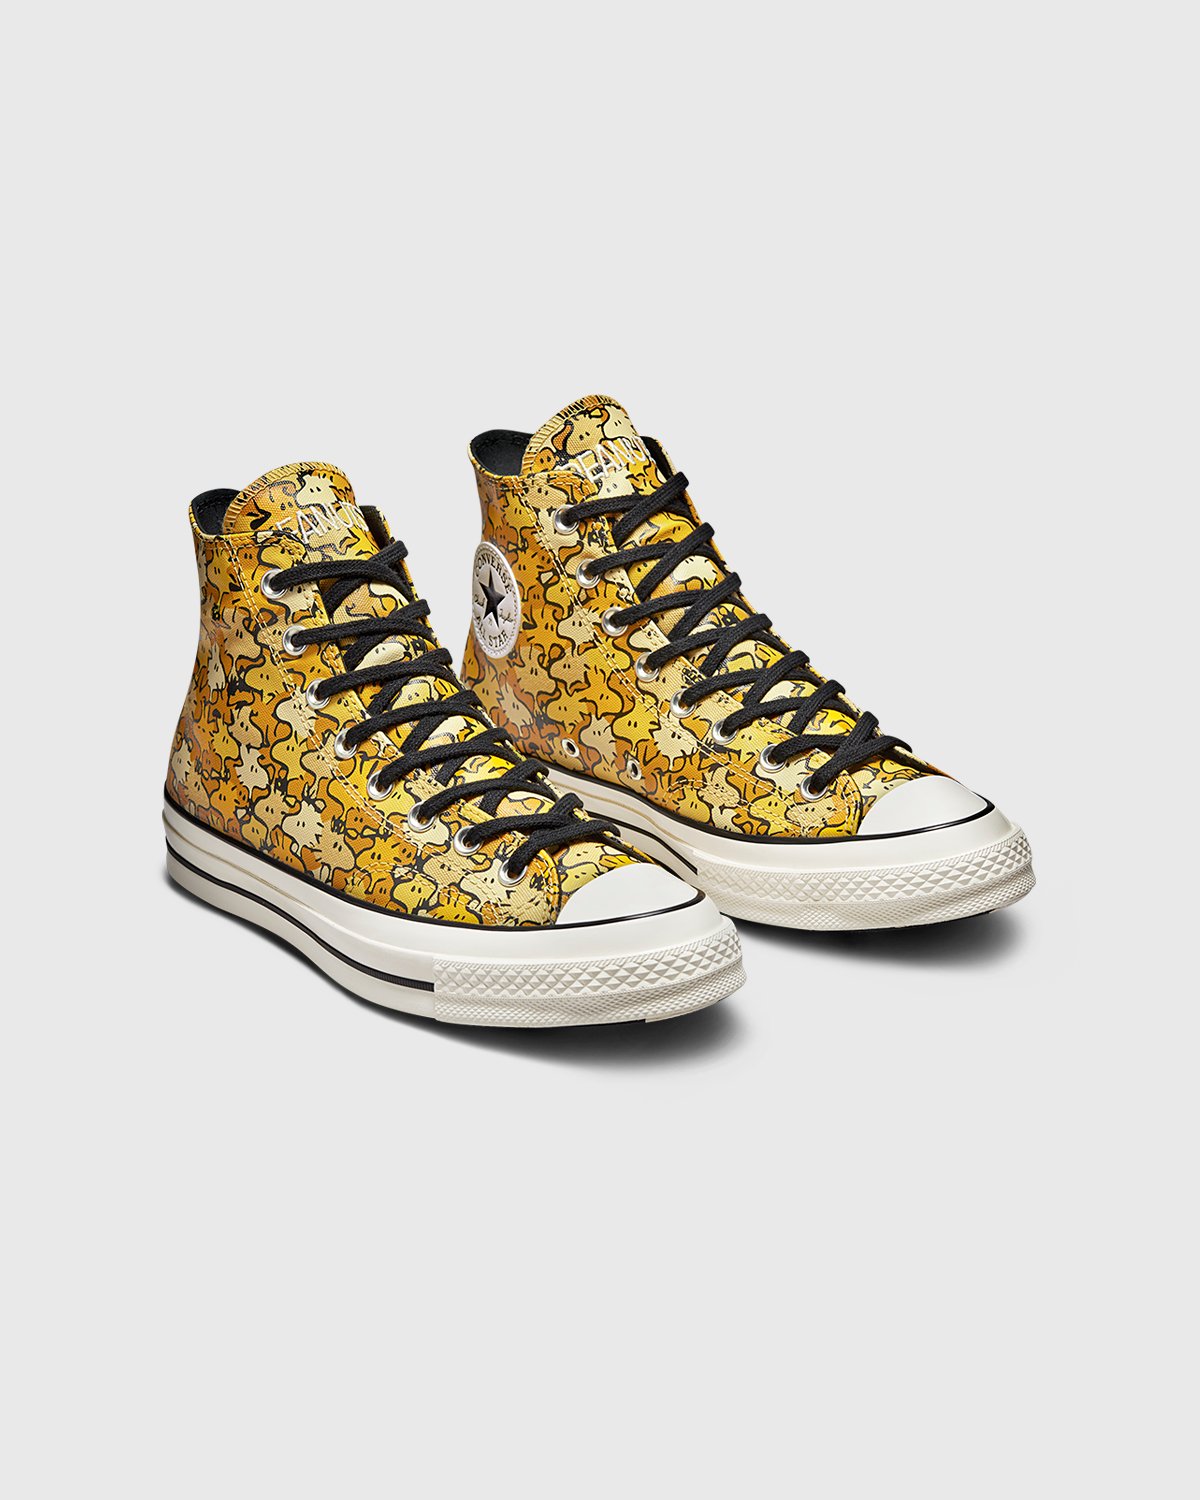 Converse x Peanuts - Chuck 70 Hi Soba/Zinc Yellow/Topaz Gold - Footwear - Yellow - Image 3